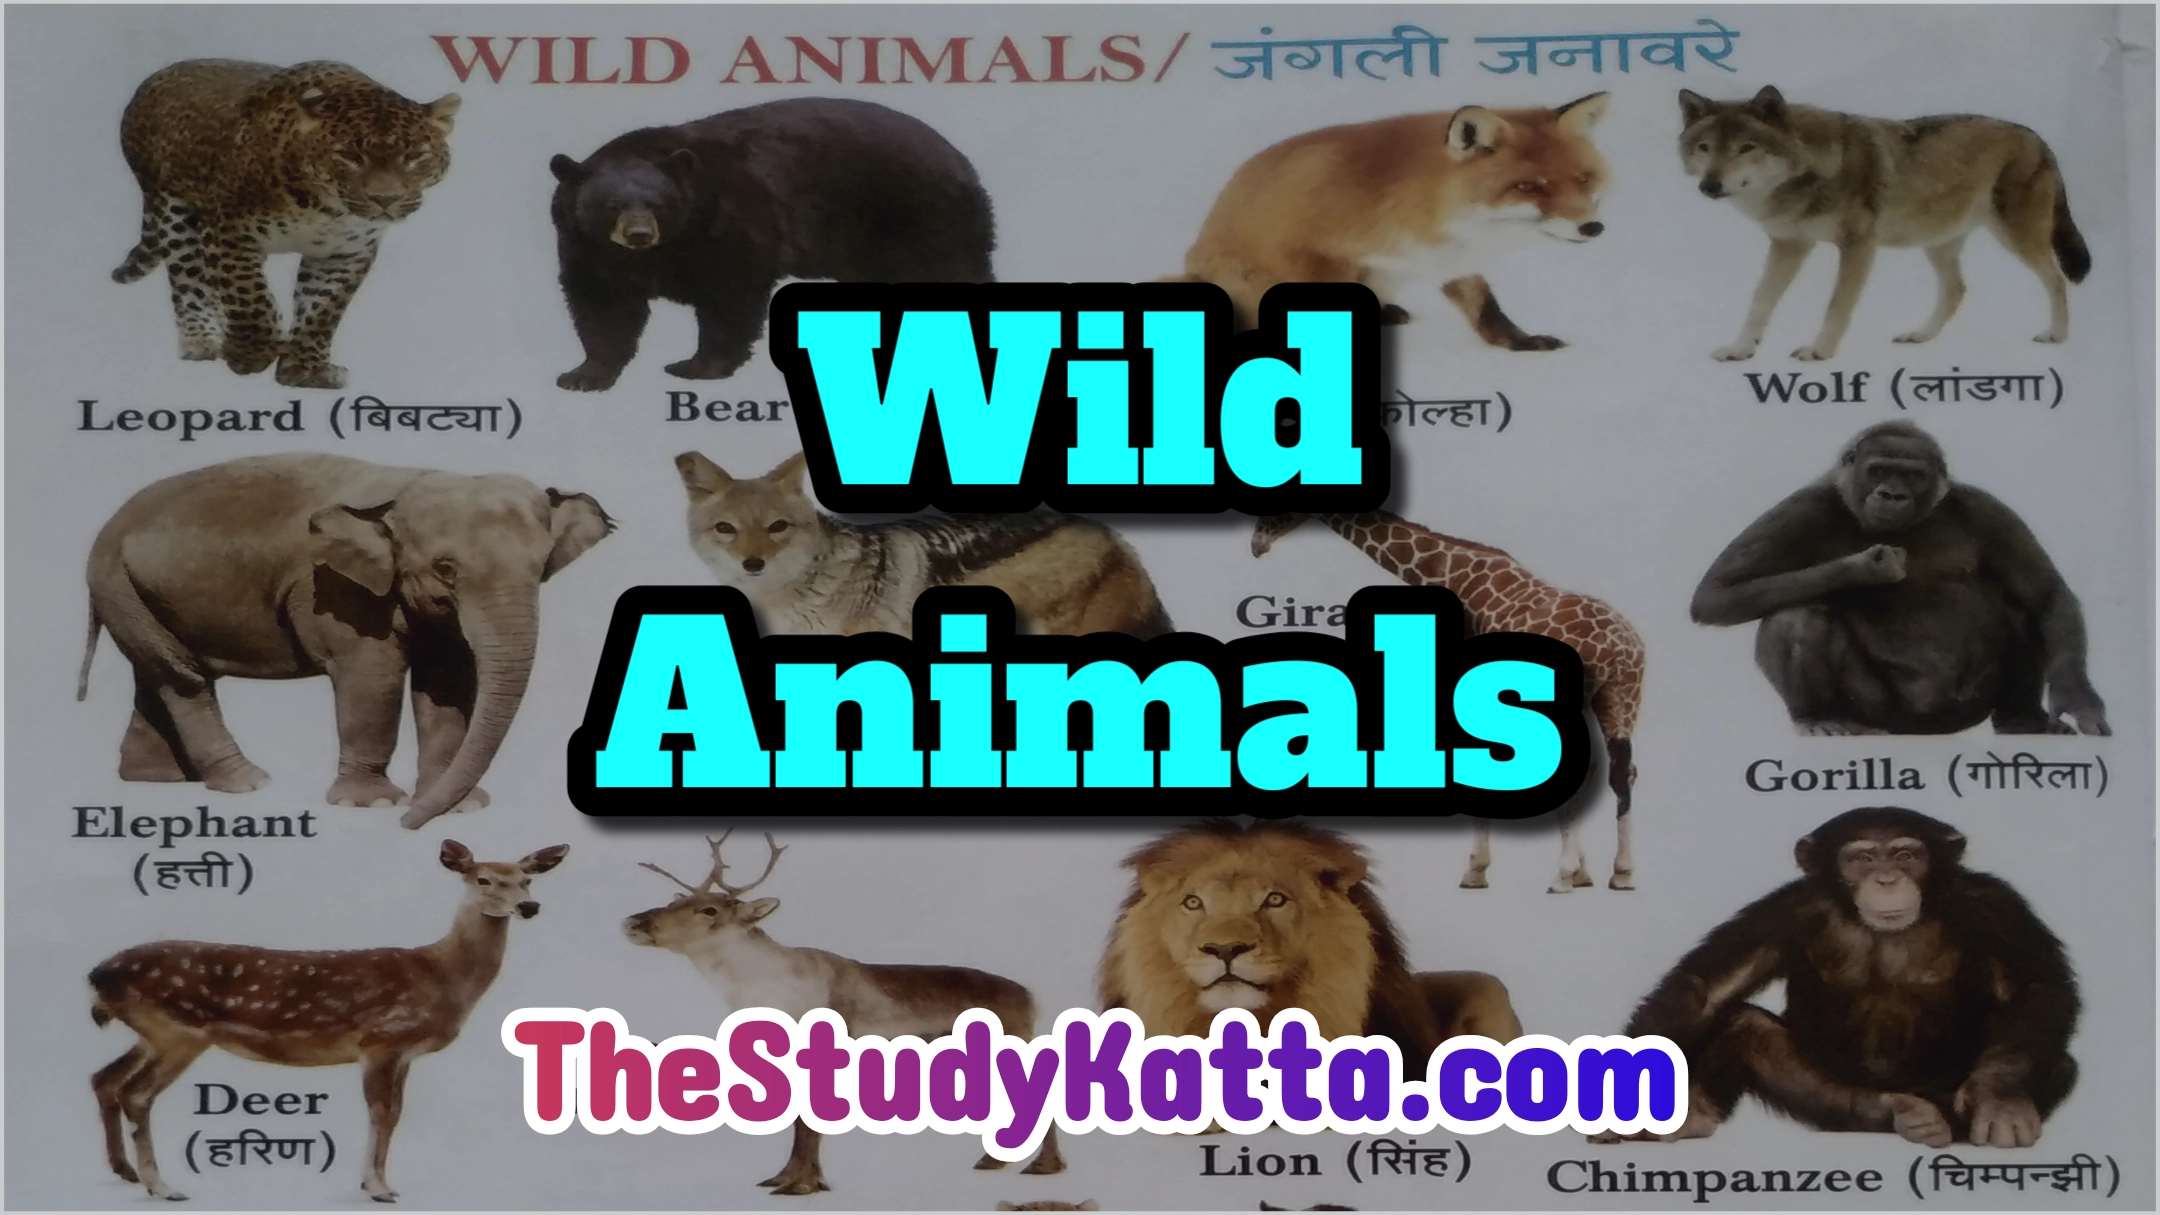 Wild animal names in English and Marathi | जंगली प्राणी नावे इंग्रजी व  मराठी - The Study Katta